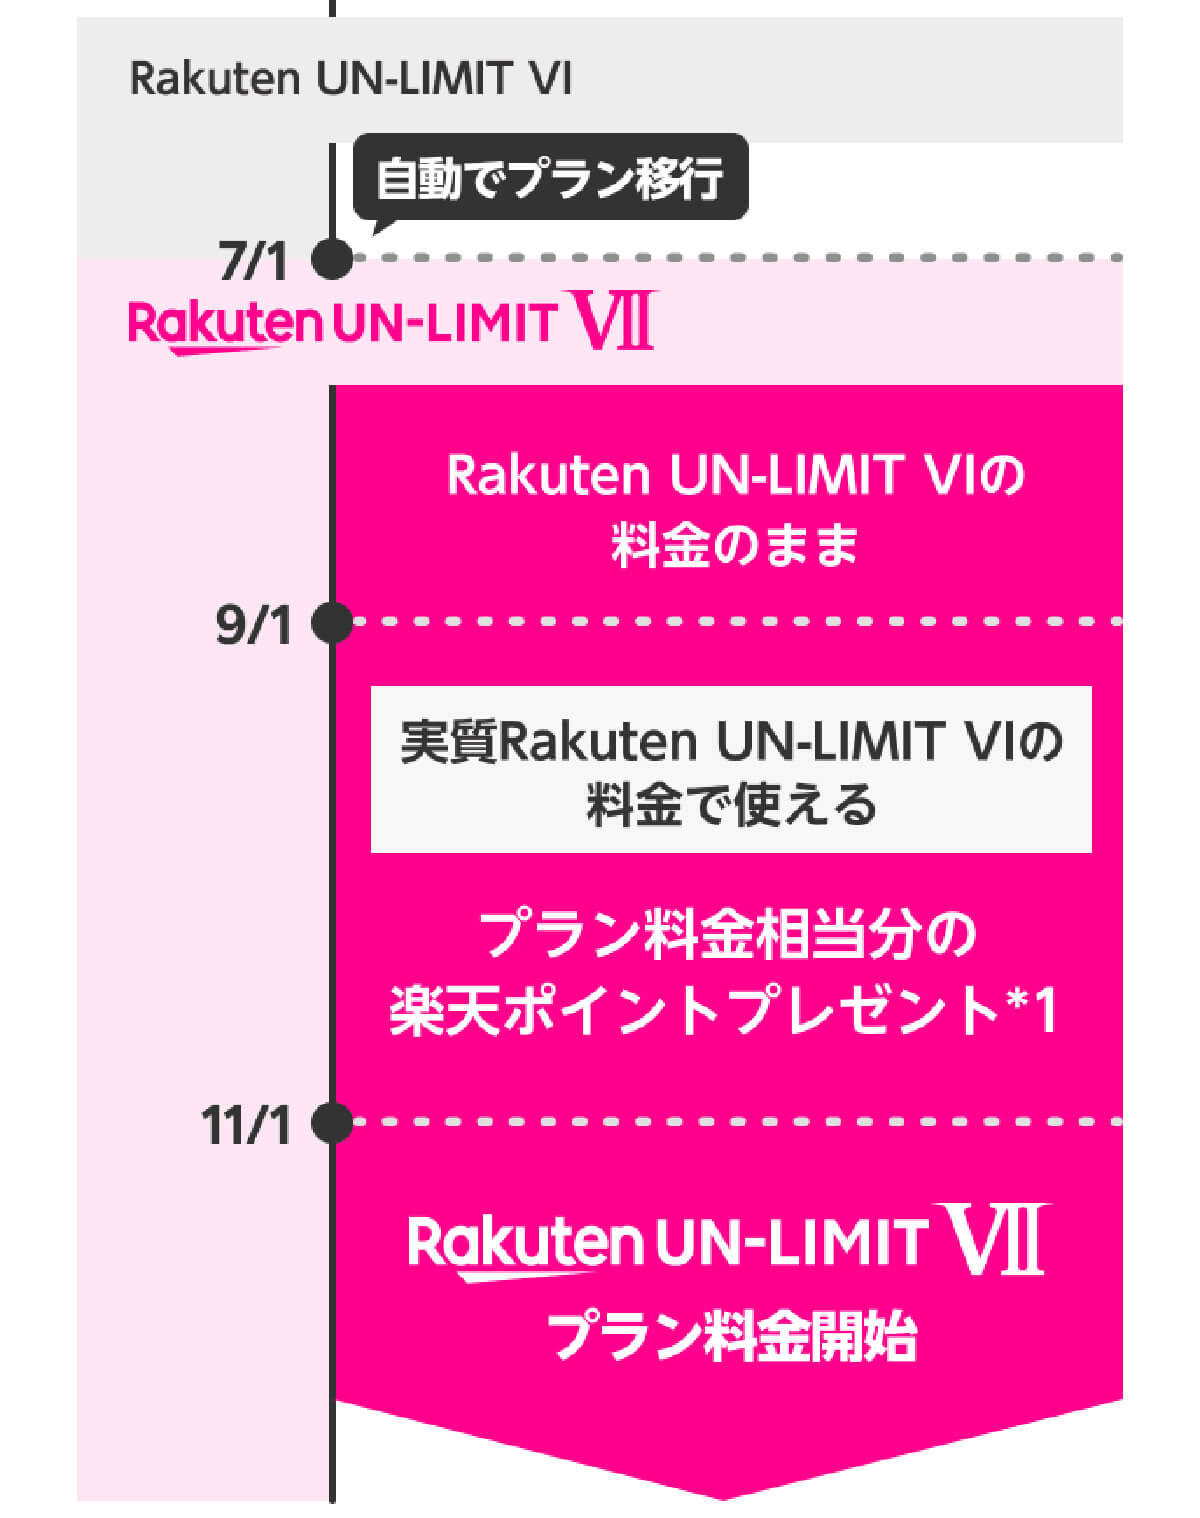 「Rakuten UN-LIMIT VI」は7月から自動移行される